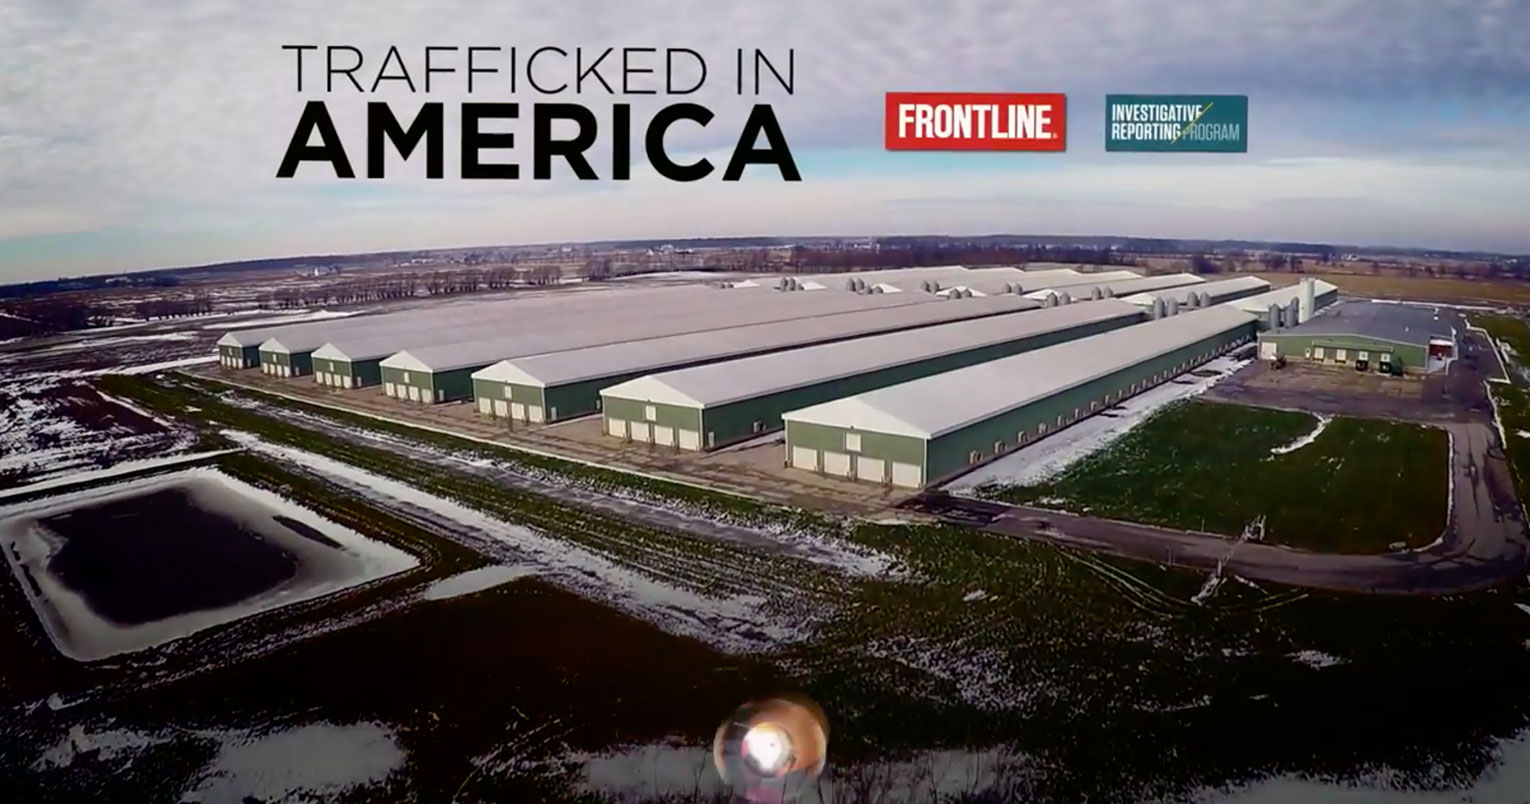 Trafficked in America